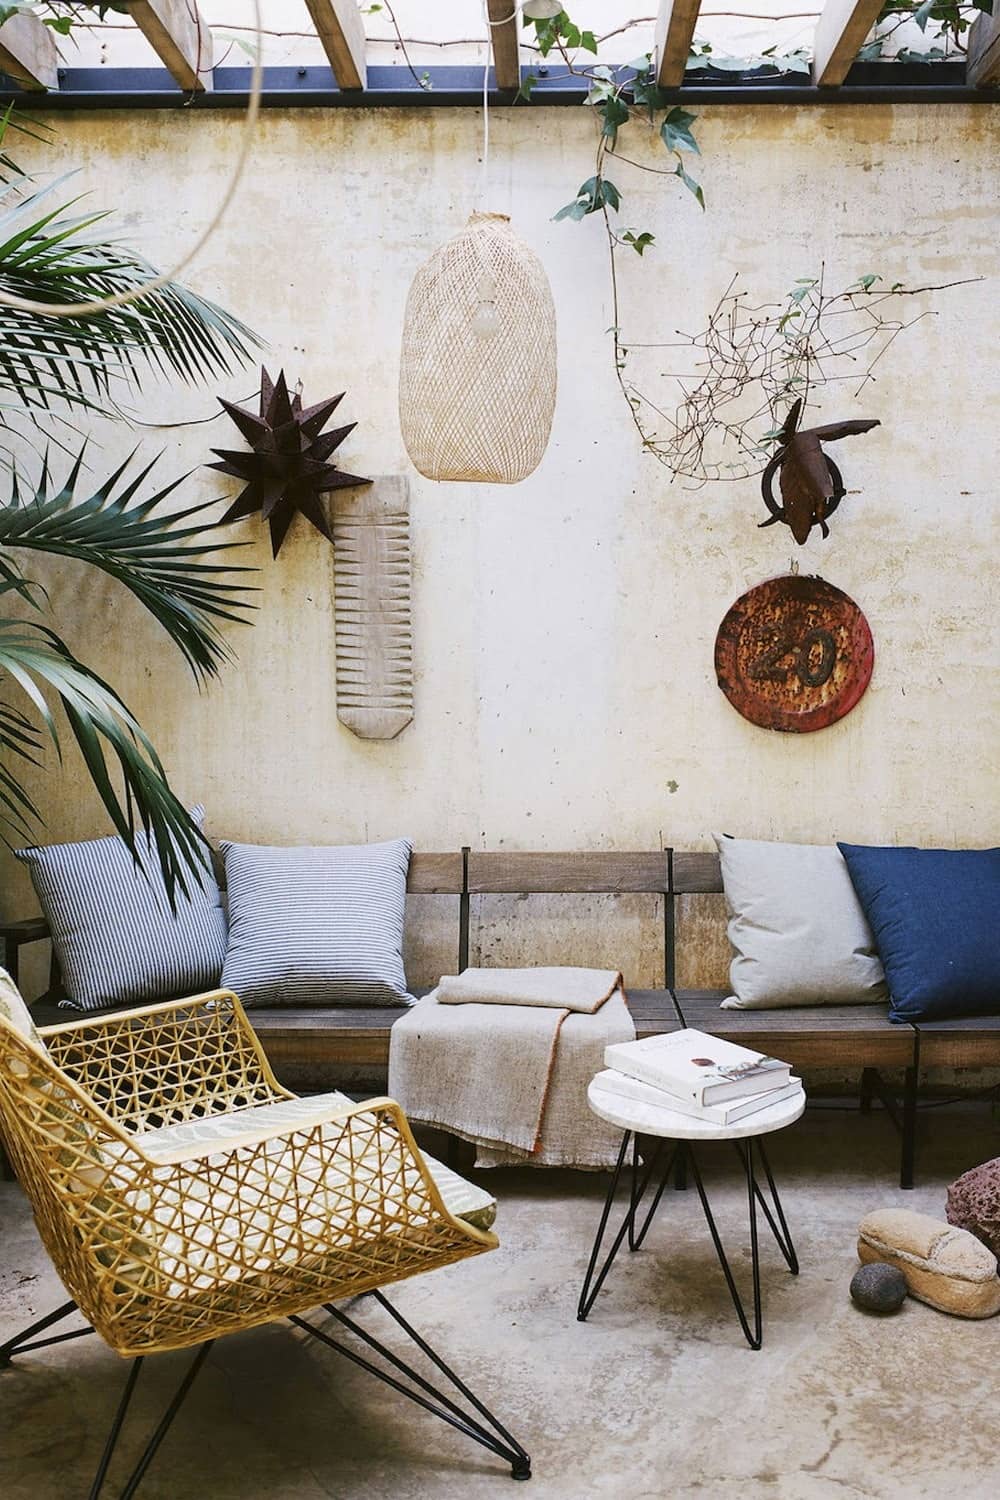 In the terrace: Lobster’s Day Furniture; Teixidors Textiles; La Variete Lamp. Photographer: Salva Lopez